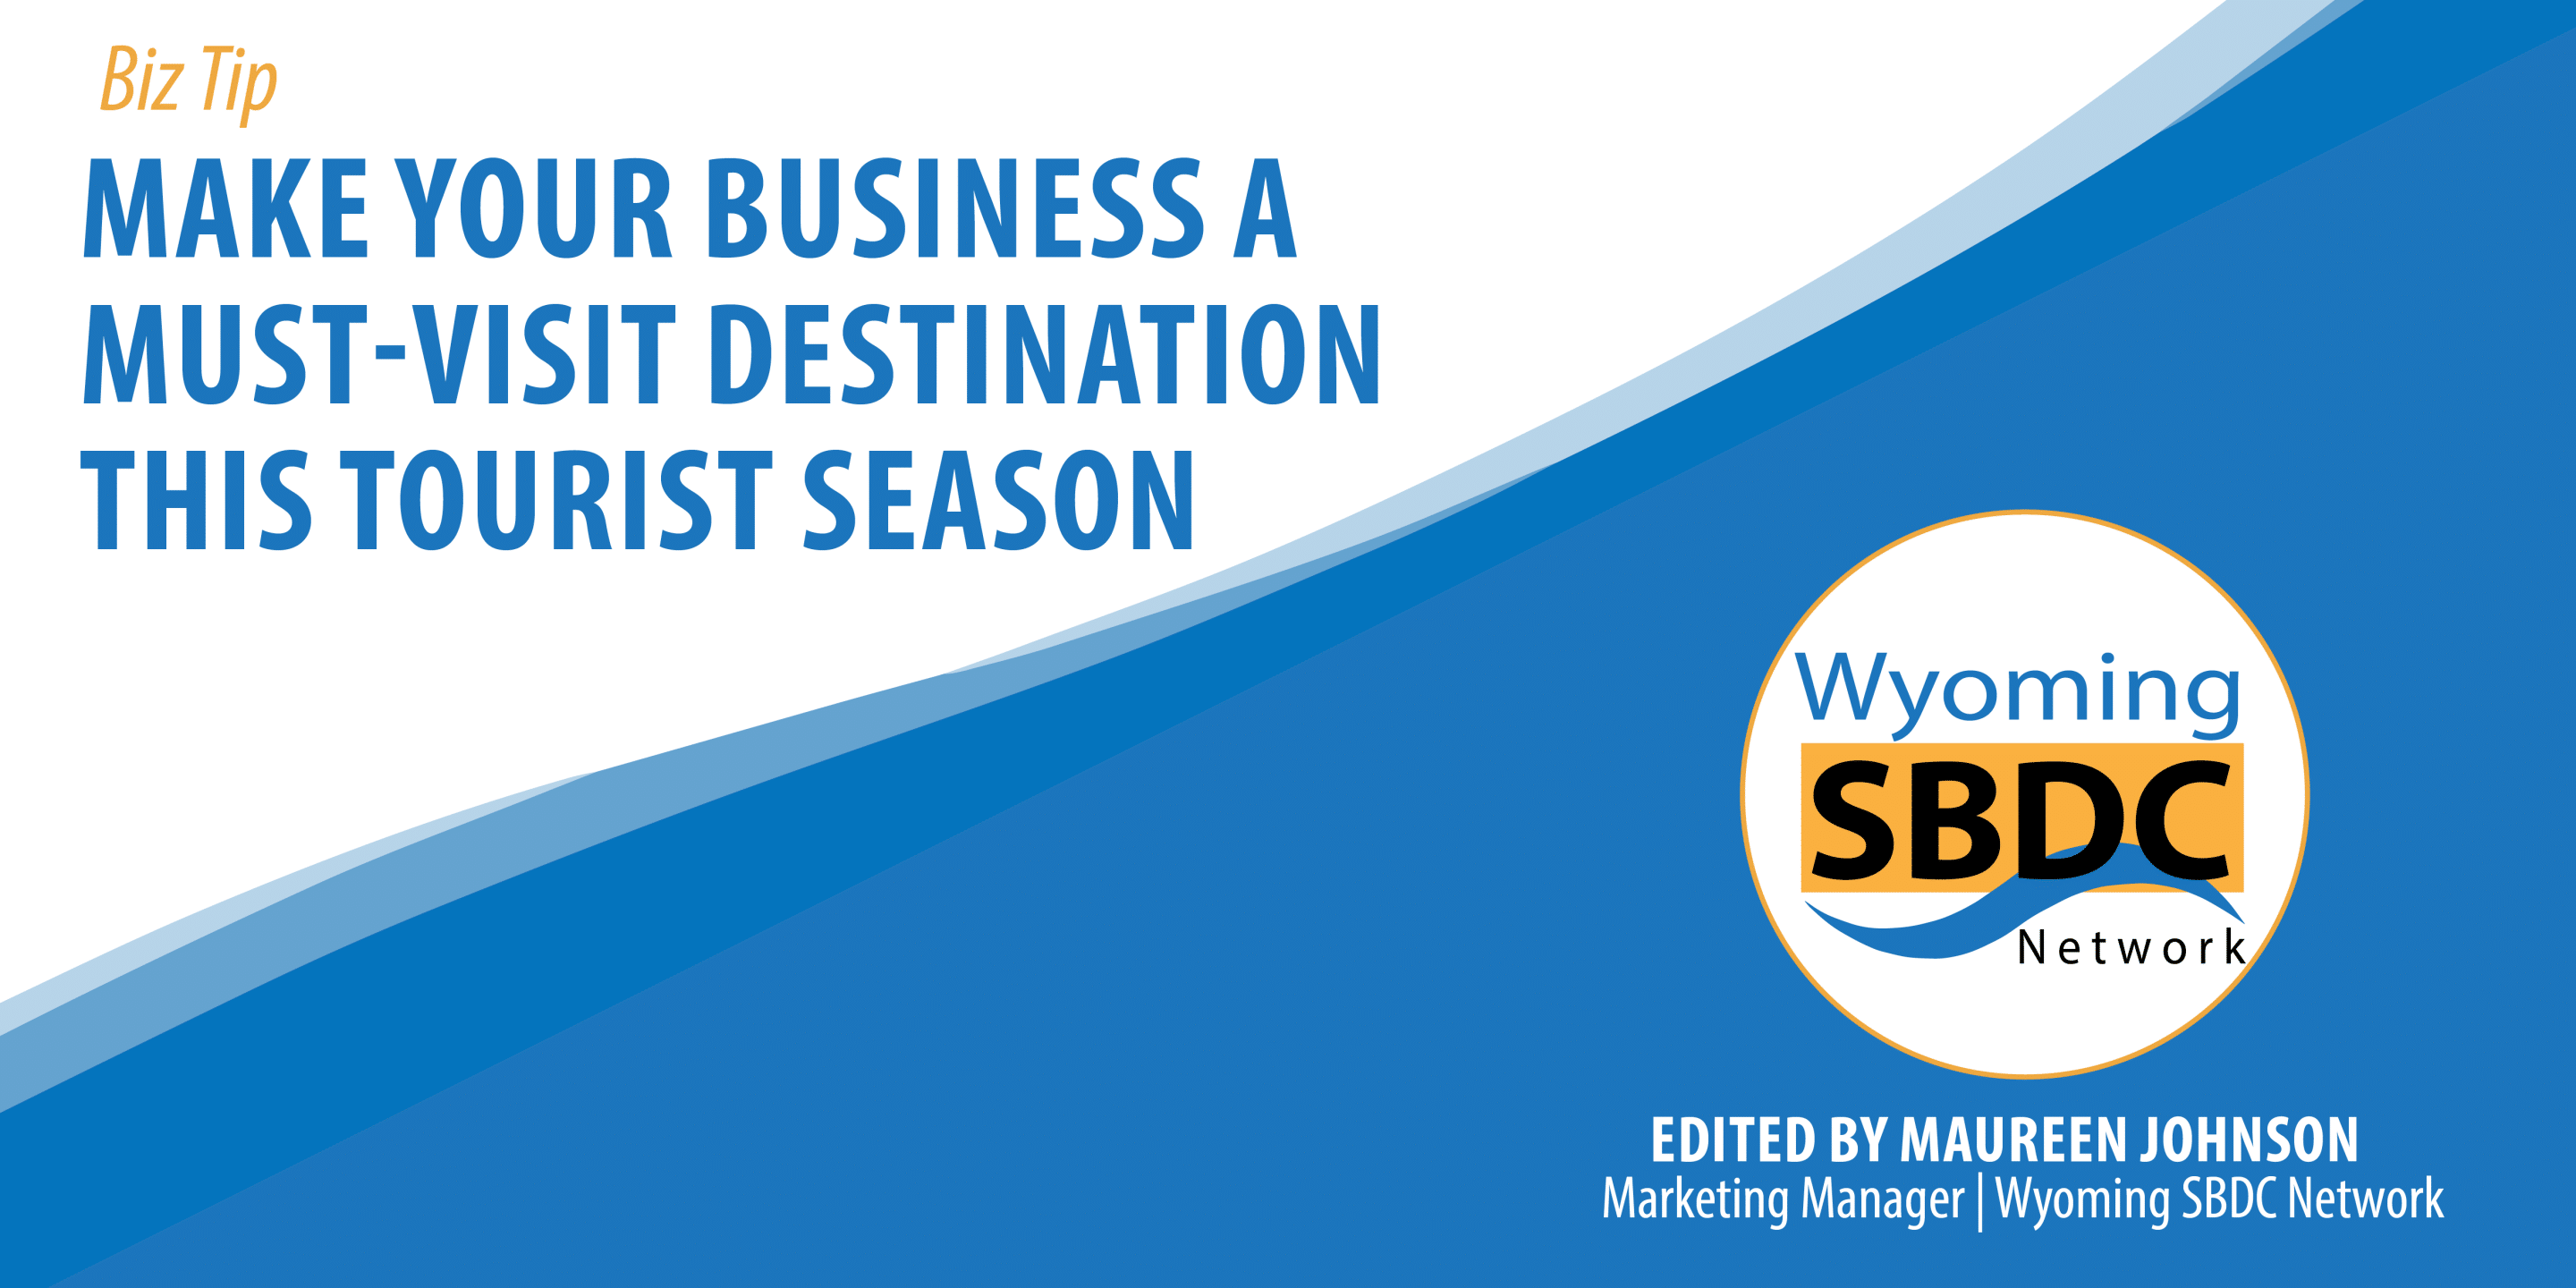 Make Your Business a Must-Visit Destination This Tourist Season